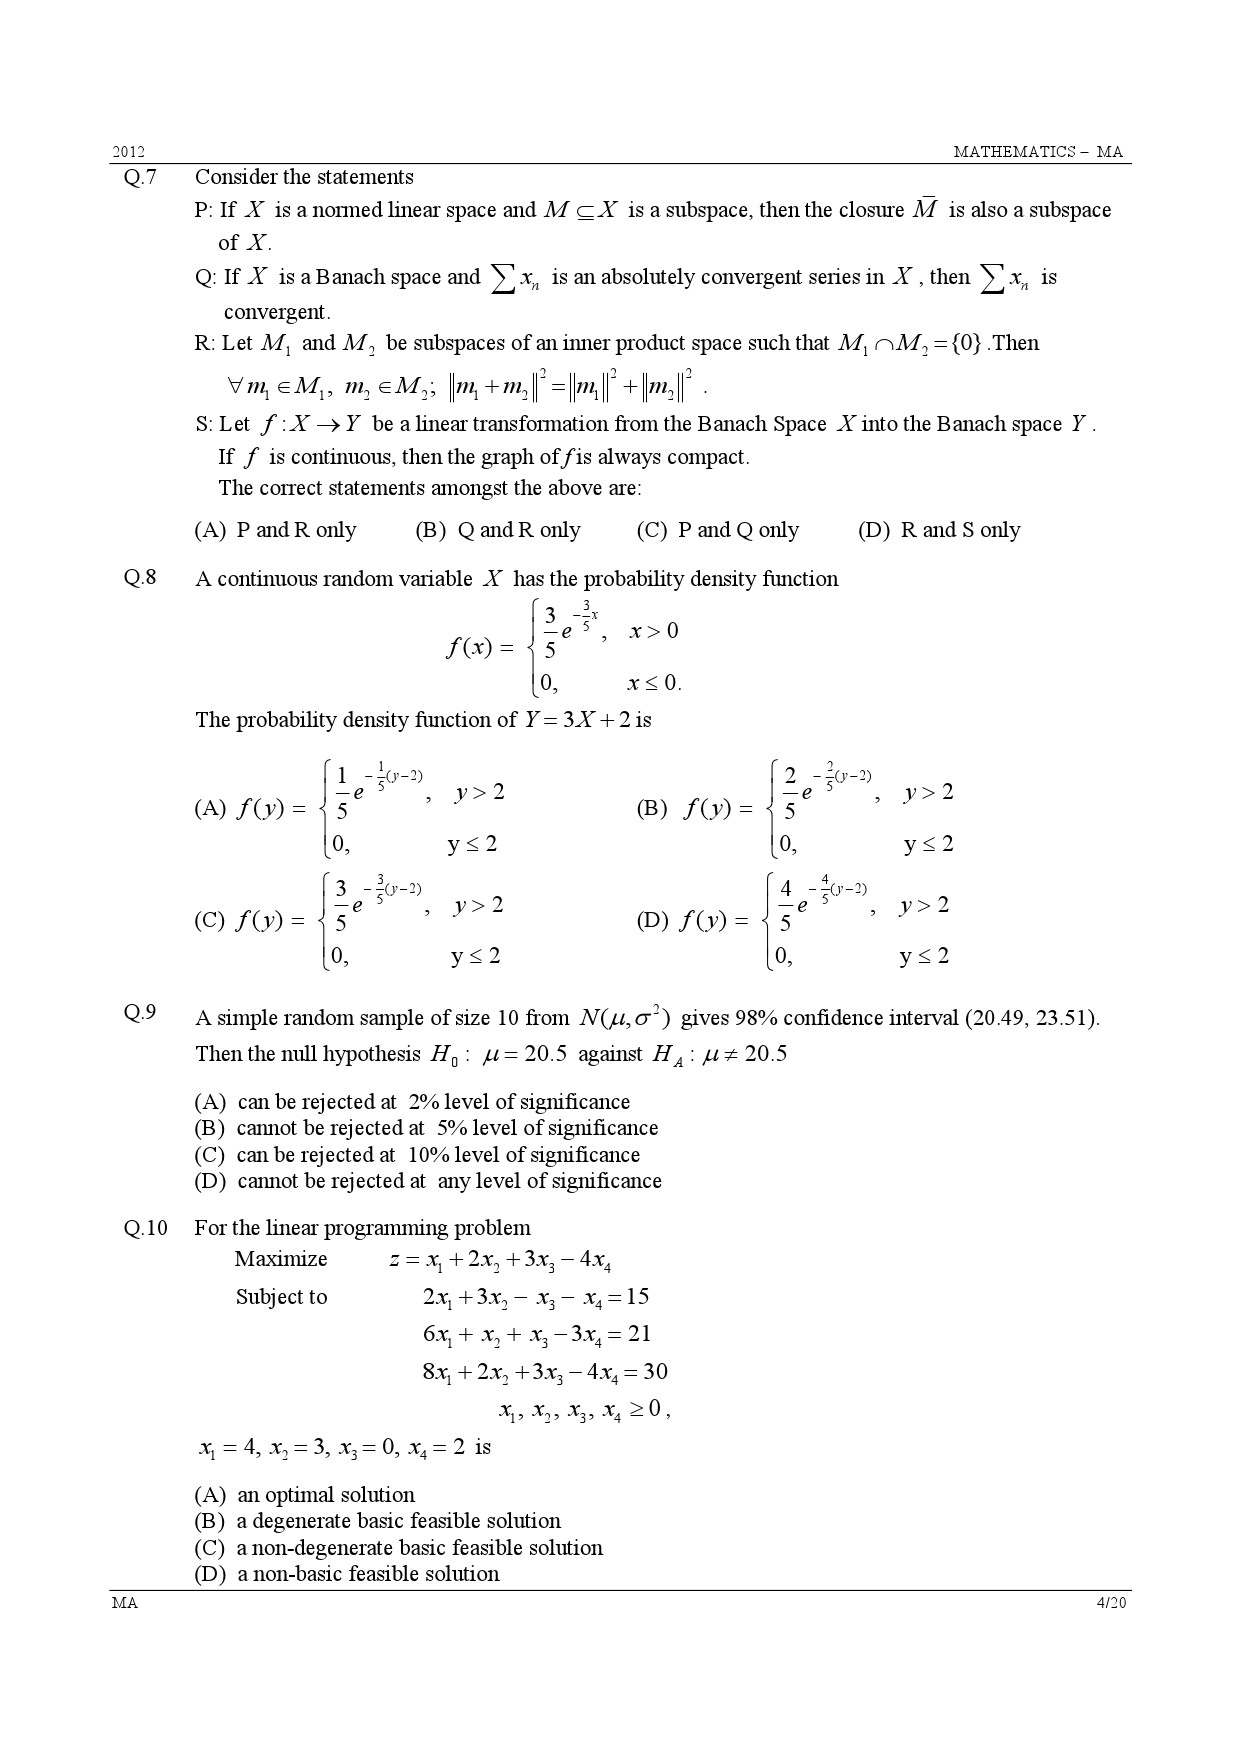 GATE Exam Question Paper 2012 Mathematics 4